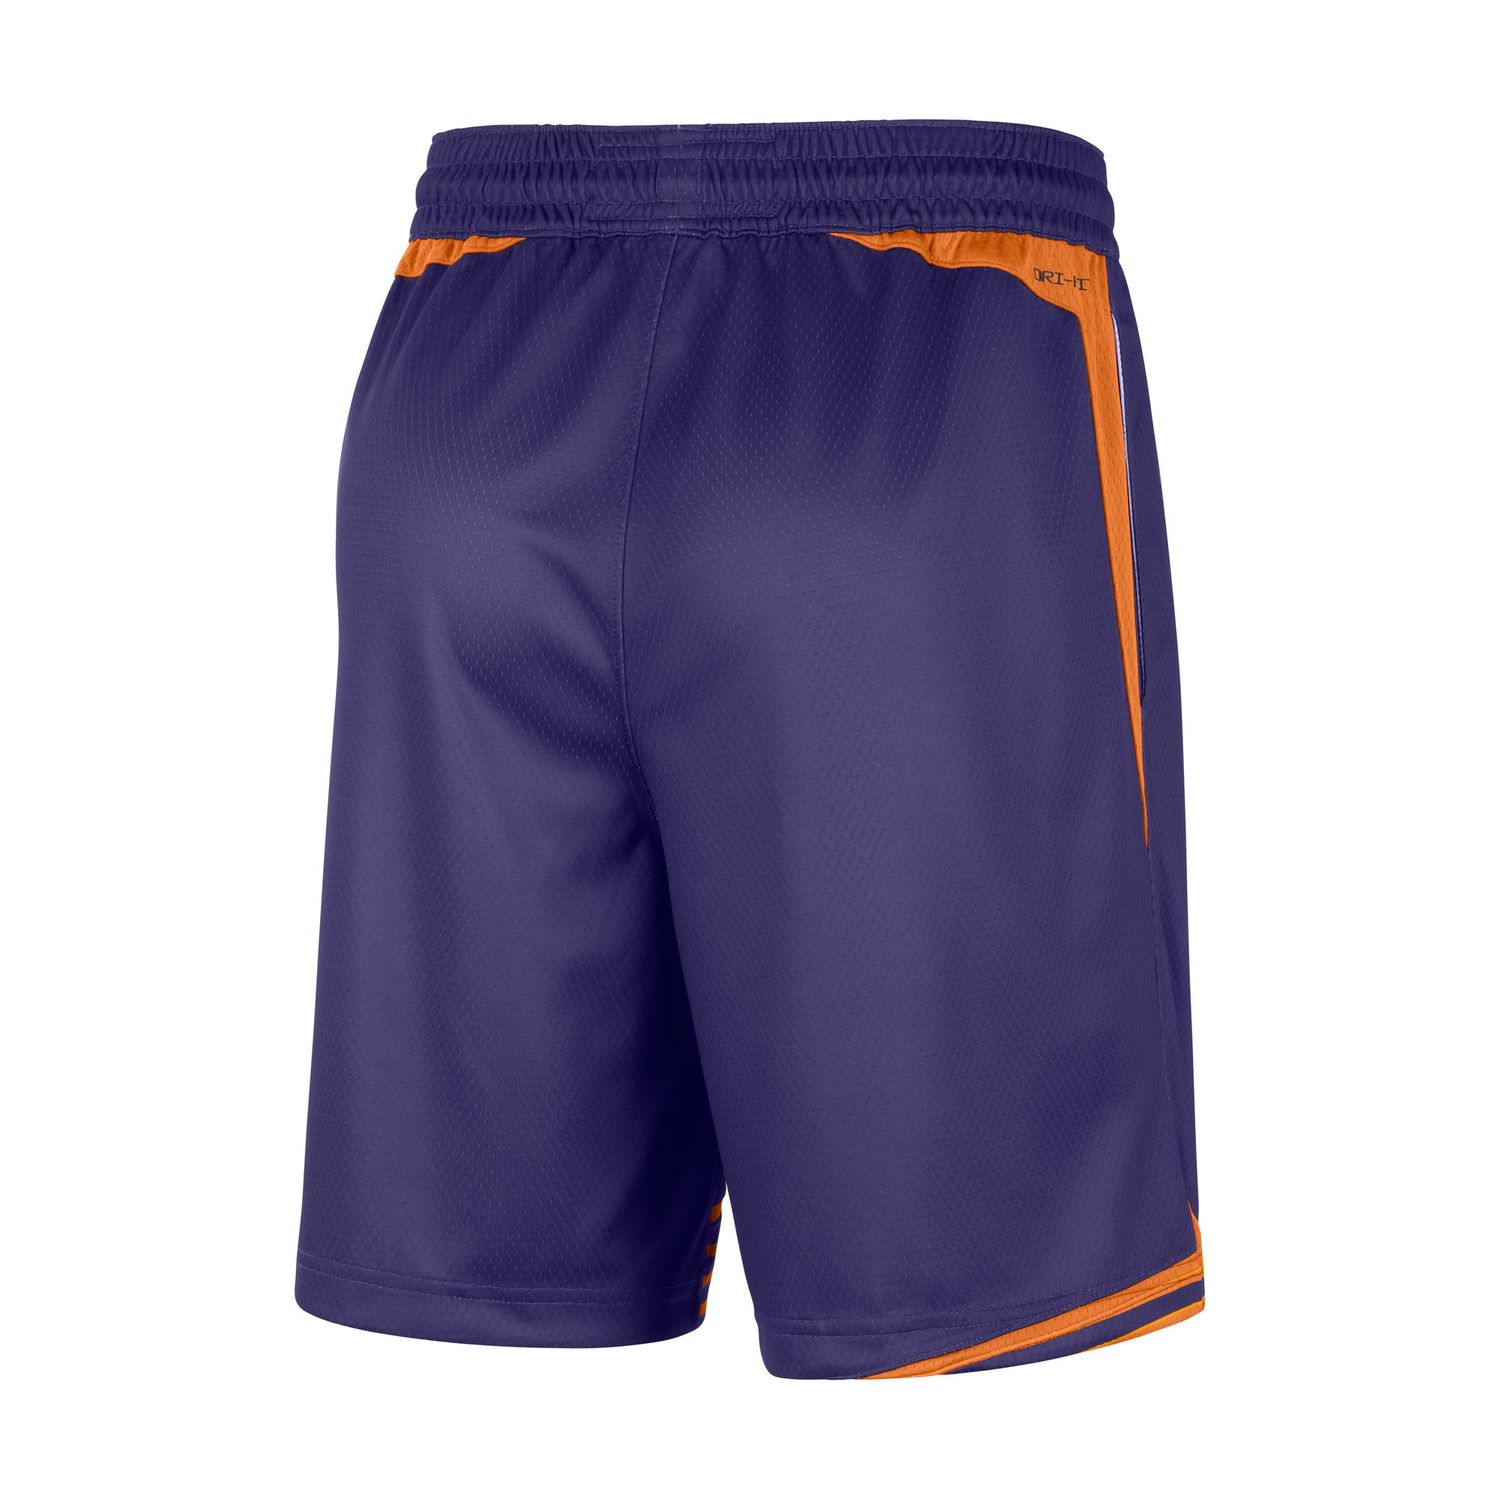 Nike NBA Phoenix Suns Icon Edition Swingman Shorts